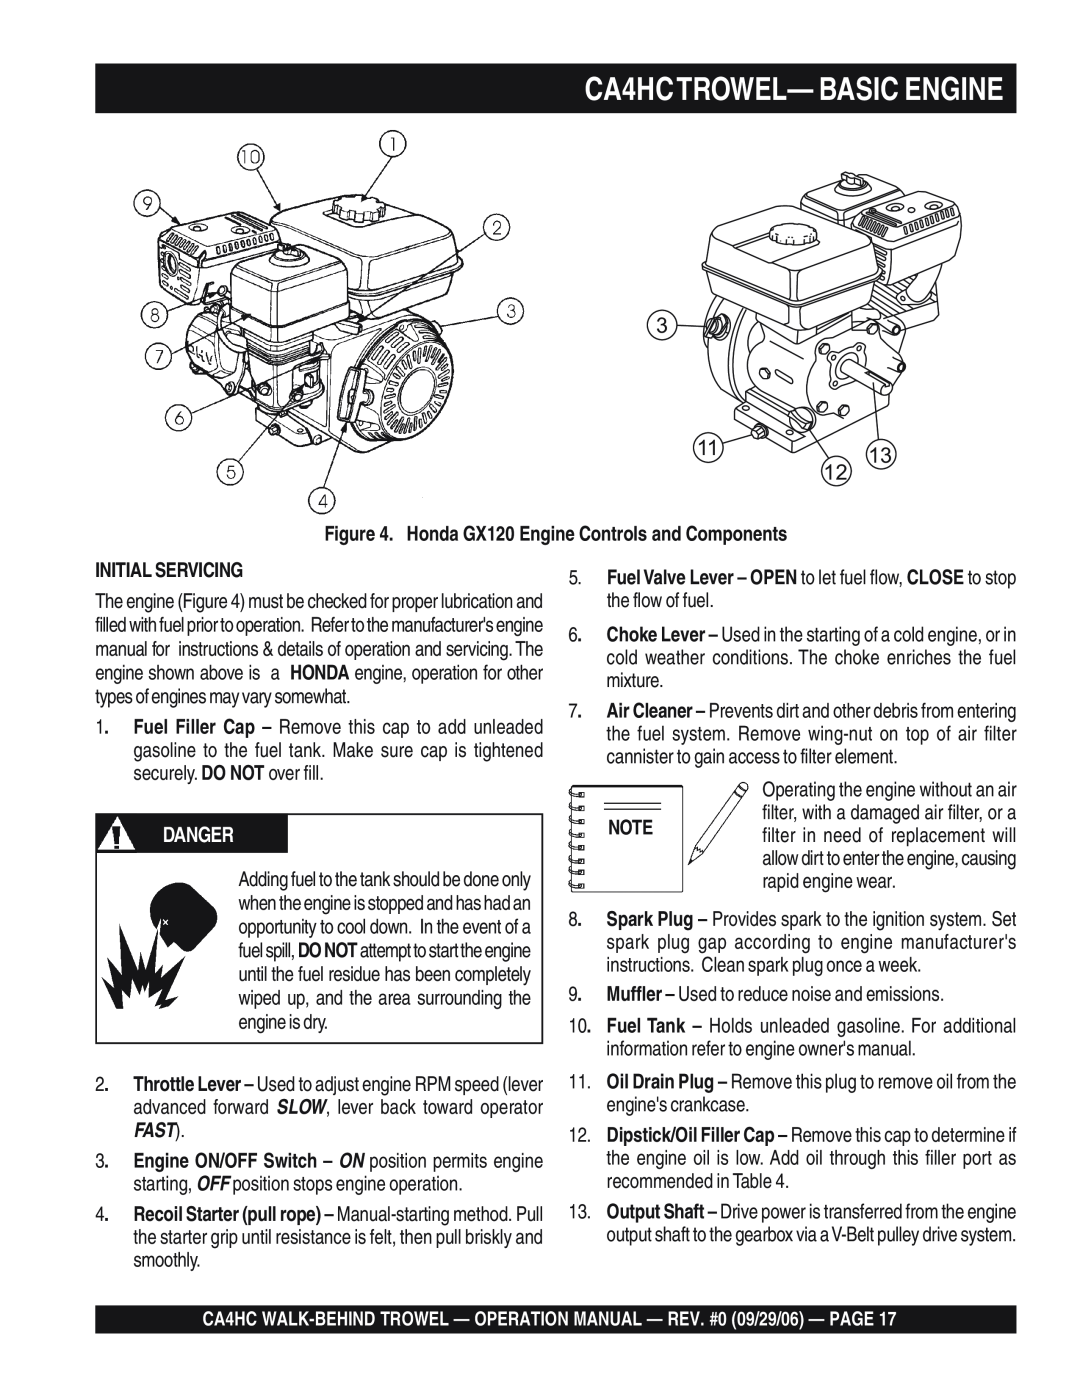 Multiquip operation manual CA4HCTROWEL— BASIC ENGINE, 3 1113 12, Danger, Initial Servicing 